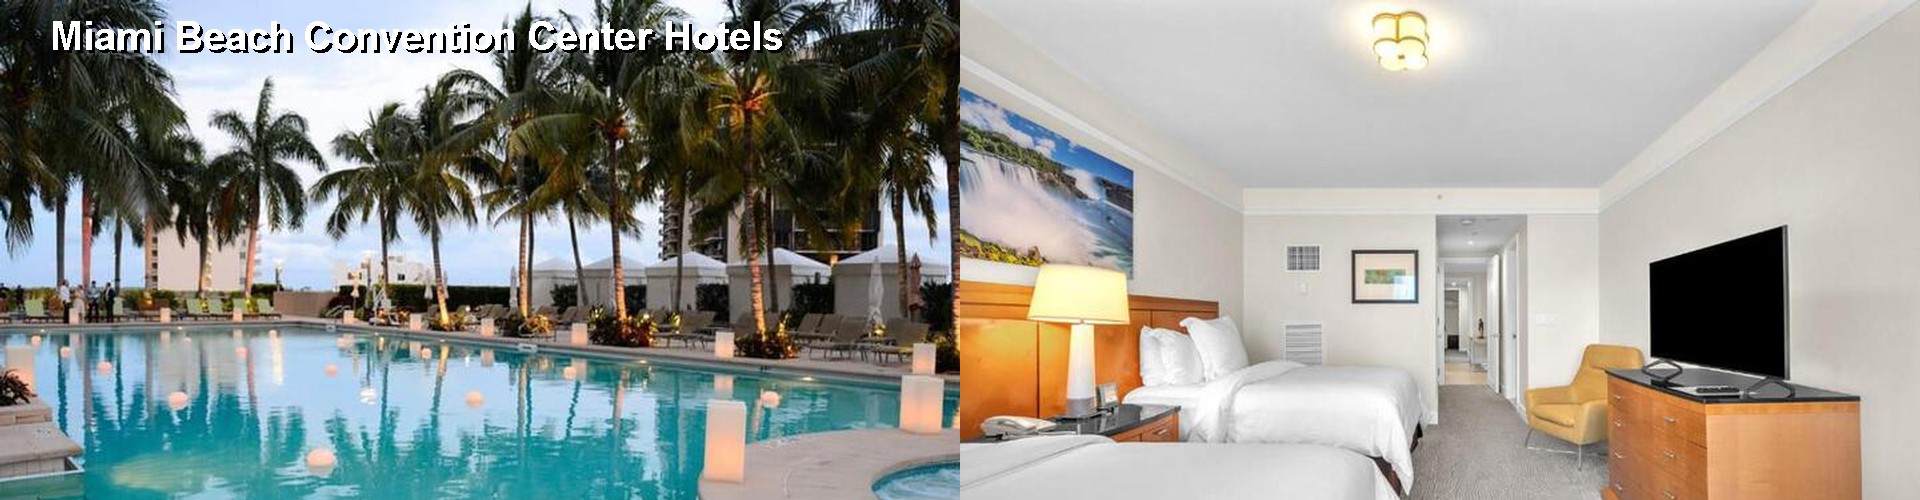 5 Best Hotels near Miami Beach Convention Center